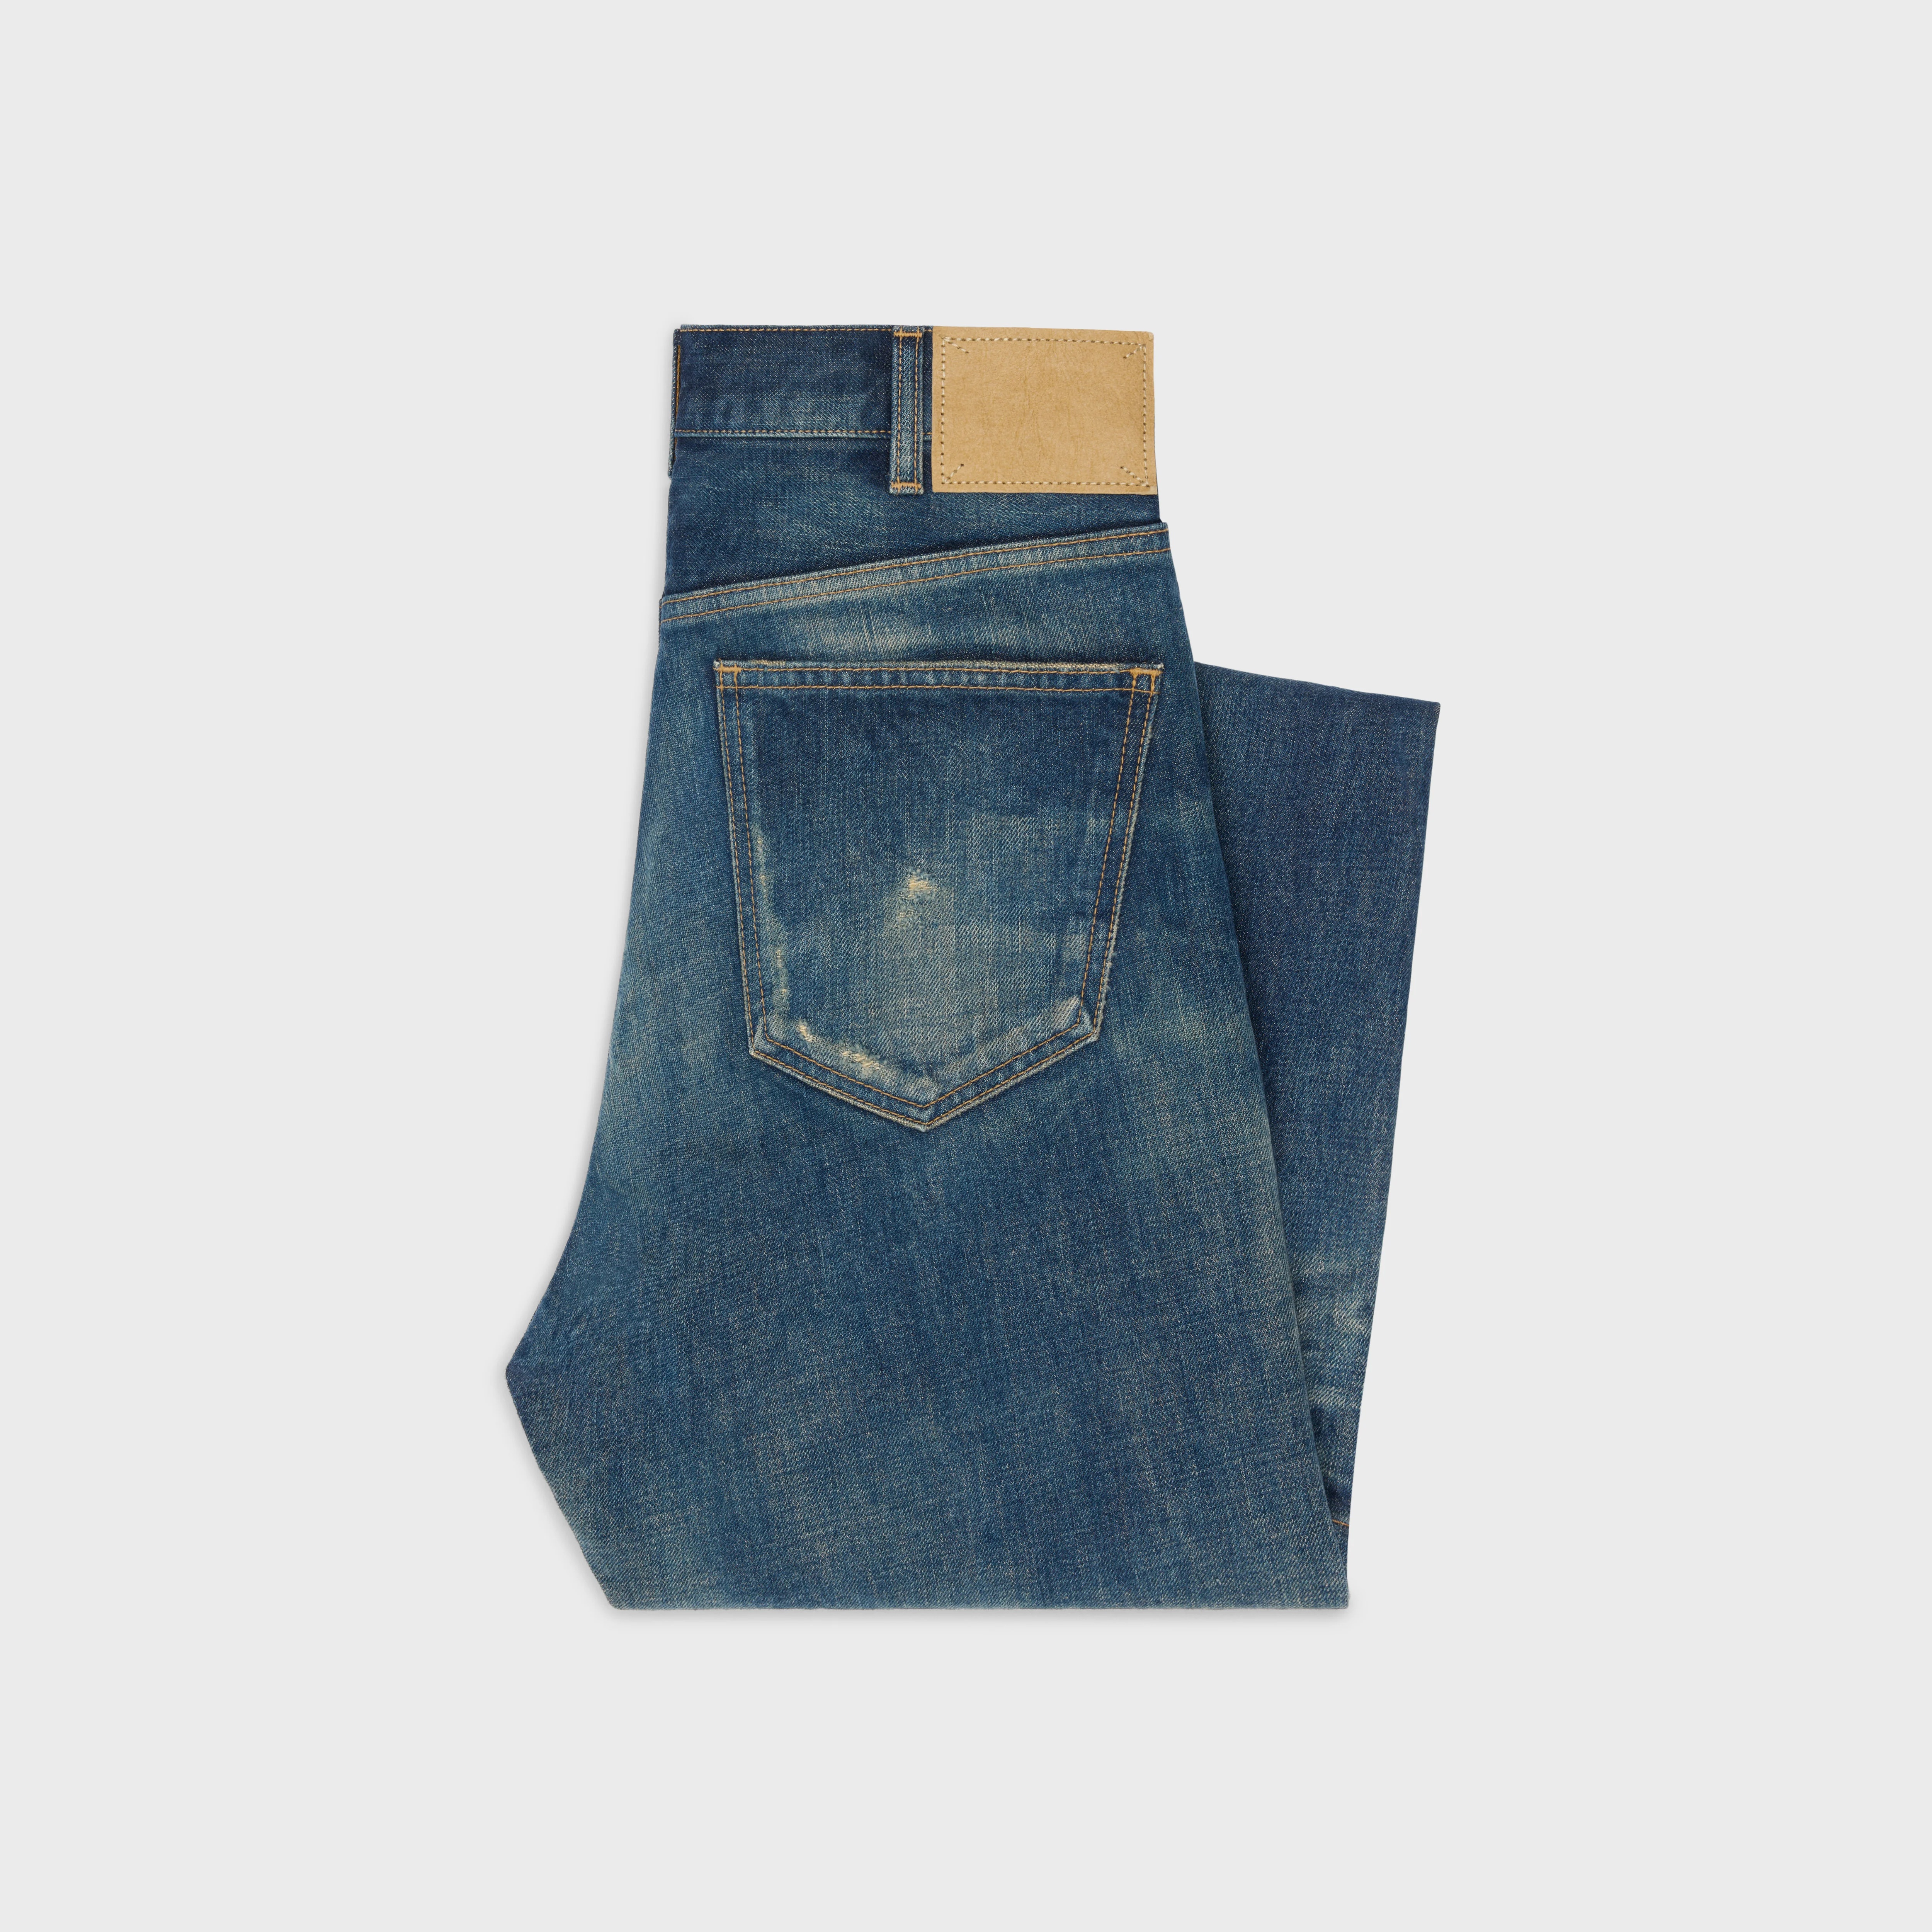 kurt jeans in destroyed blue marble denim - 2